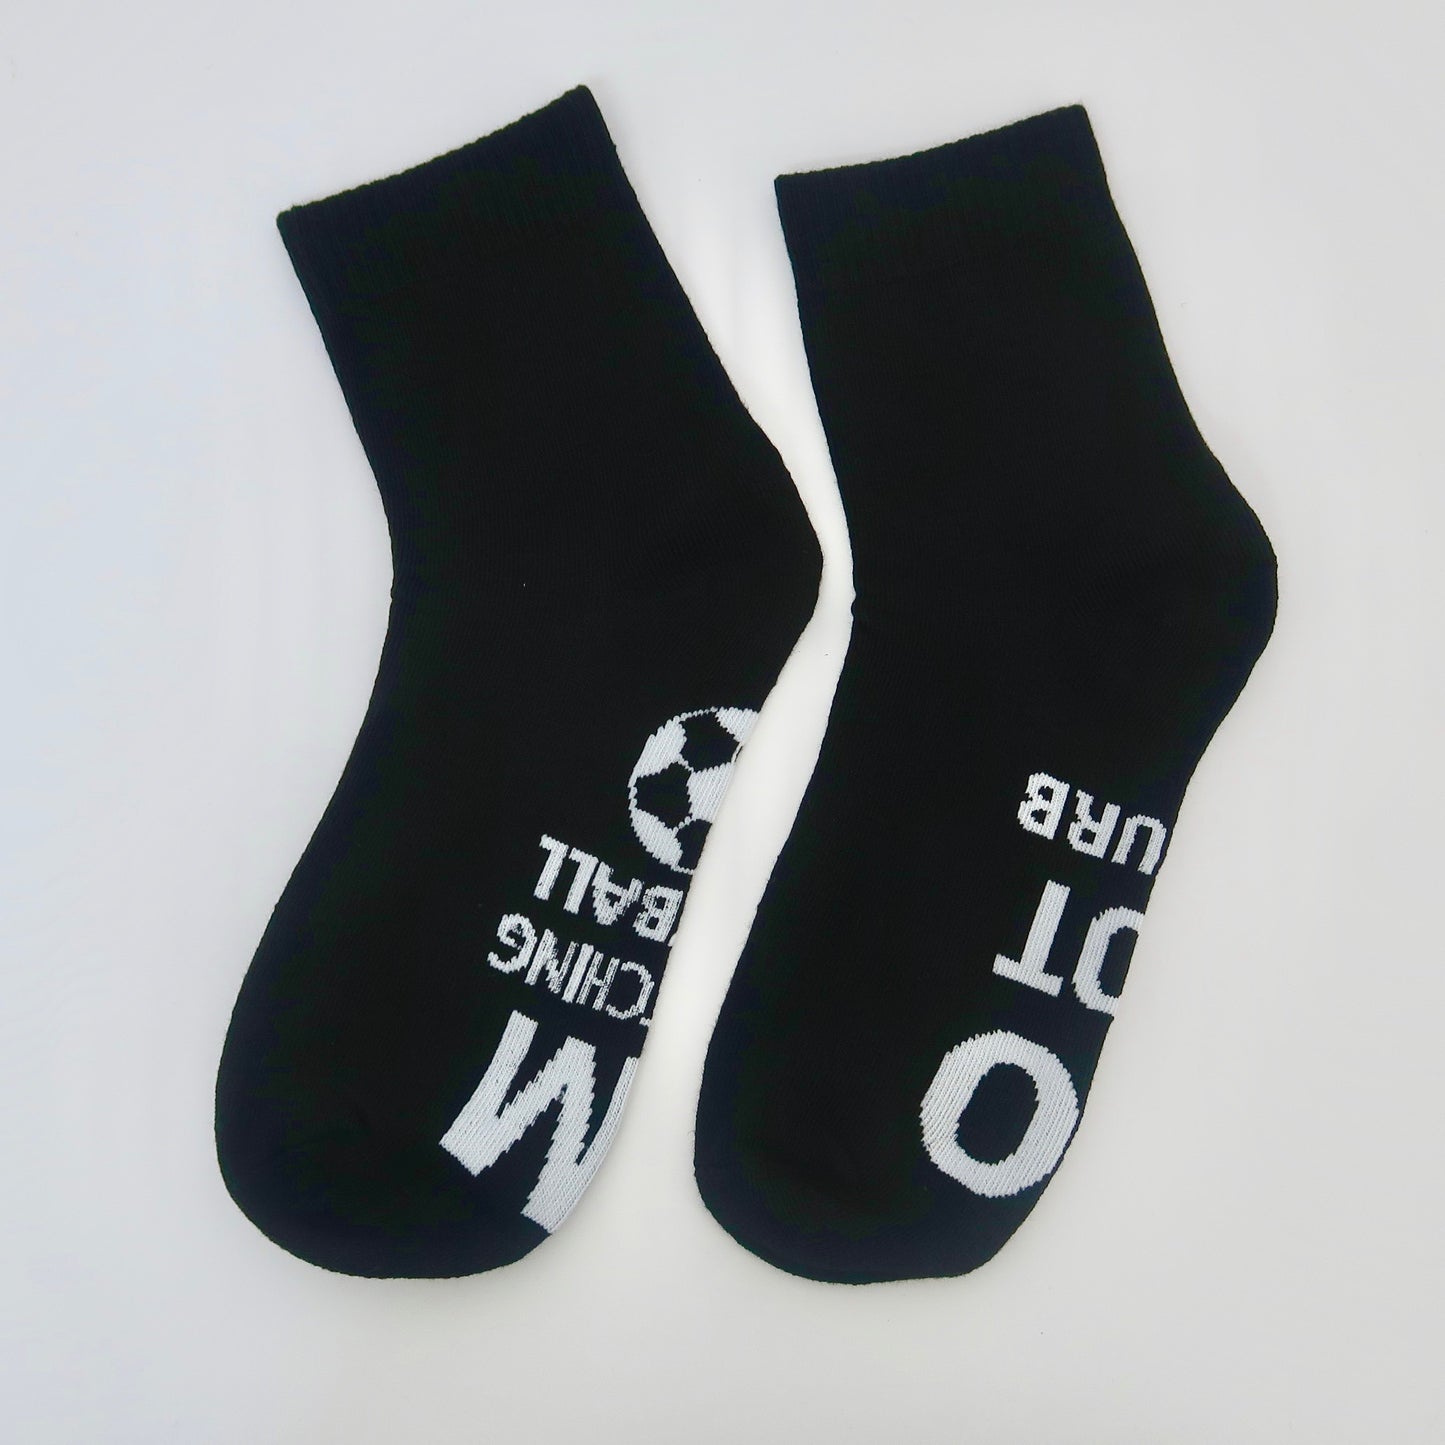 Black and White Adult Socks